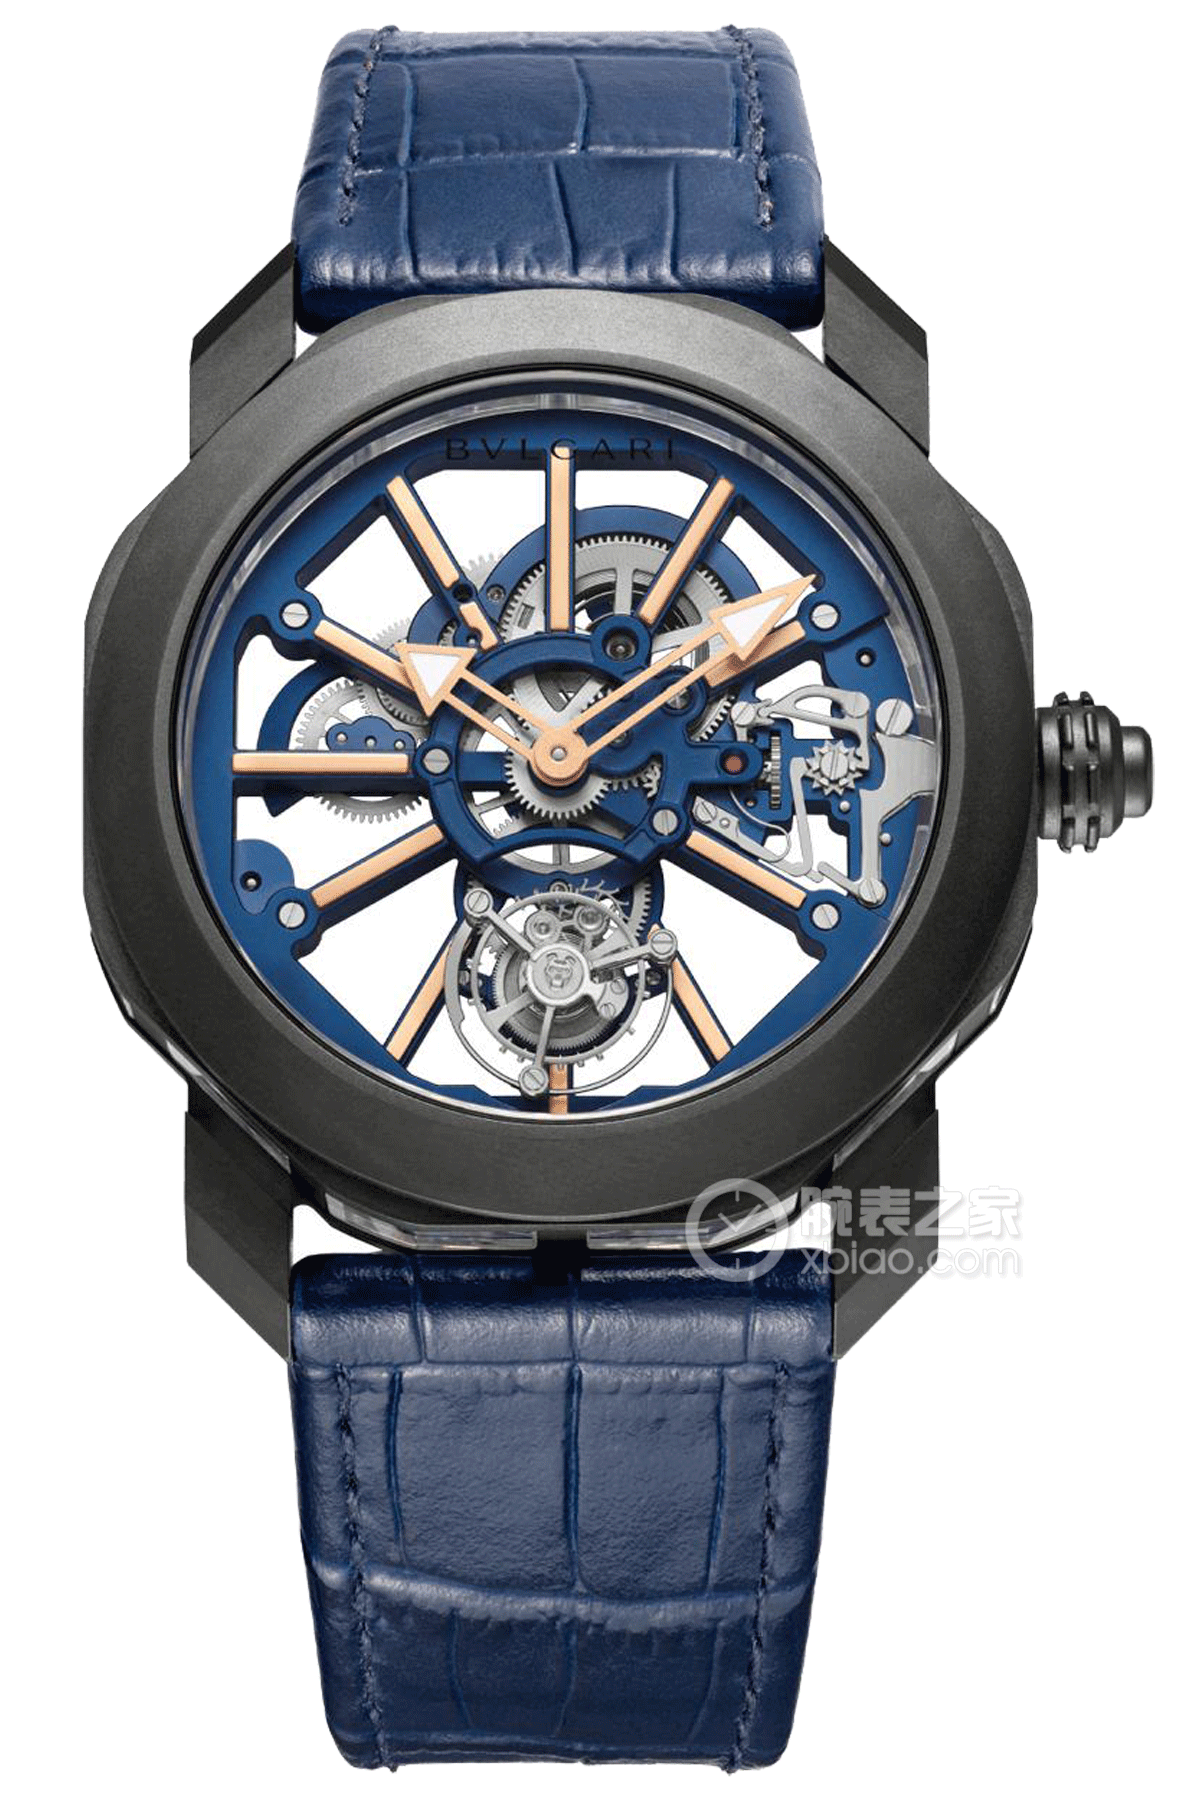 BVLGARI 宝格丽 Octo Finissimo Blue Dial 蓝色表盘超薄钢壳腕表 | iDaily Watch · 每日腕表杂志